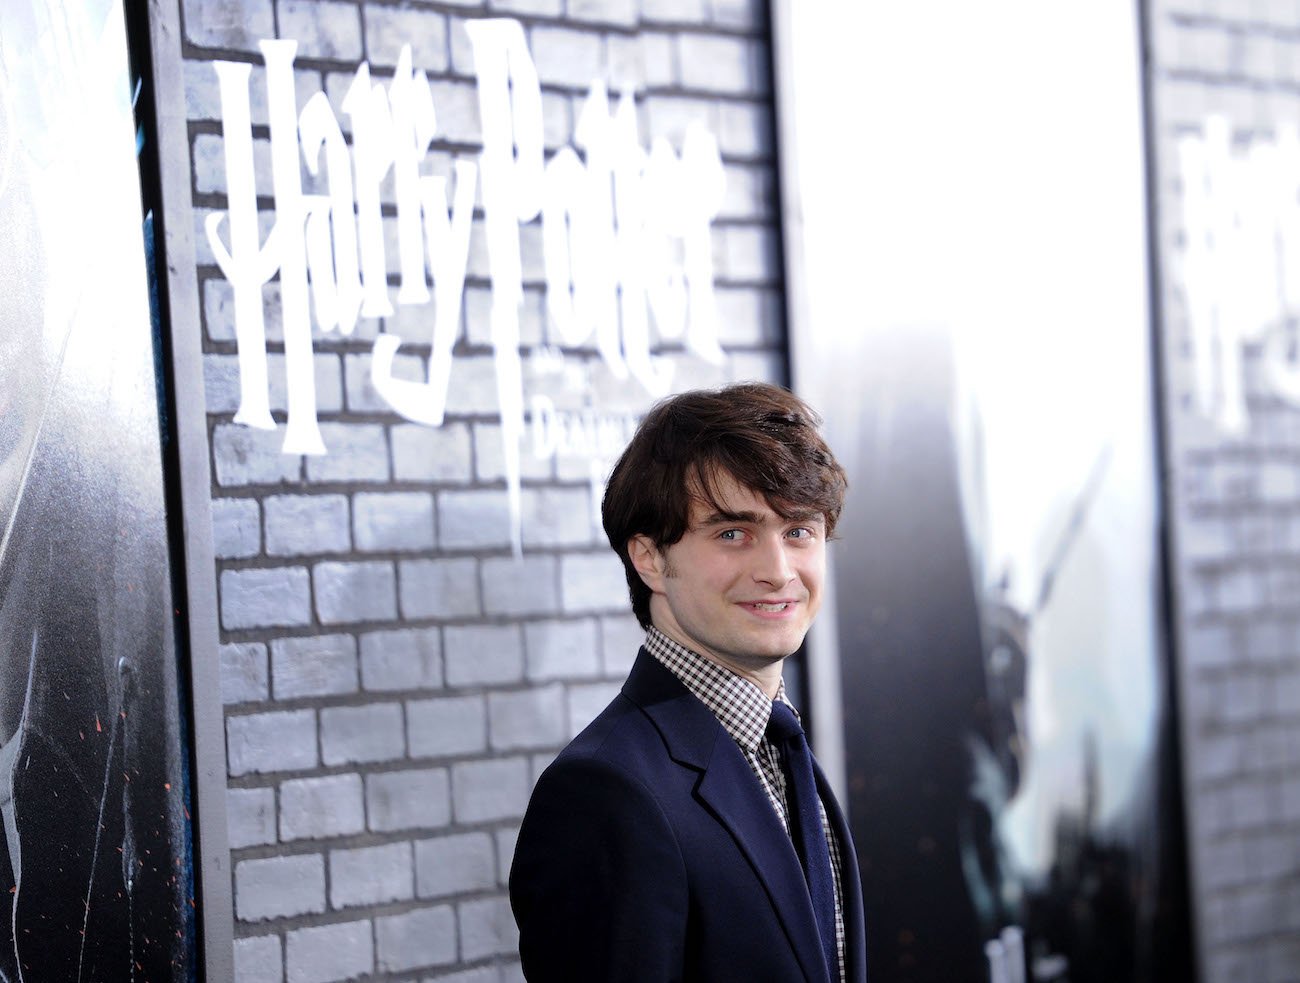 'Harry Potter' star Daniel Radcliffe